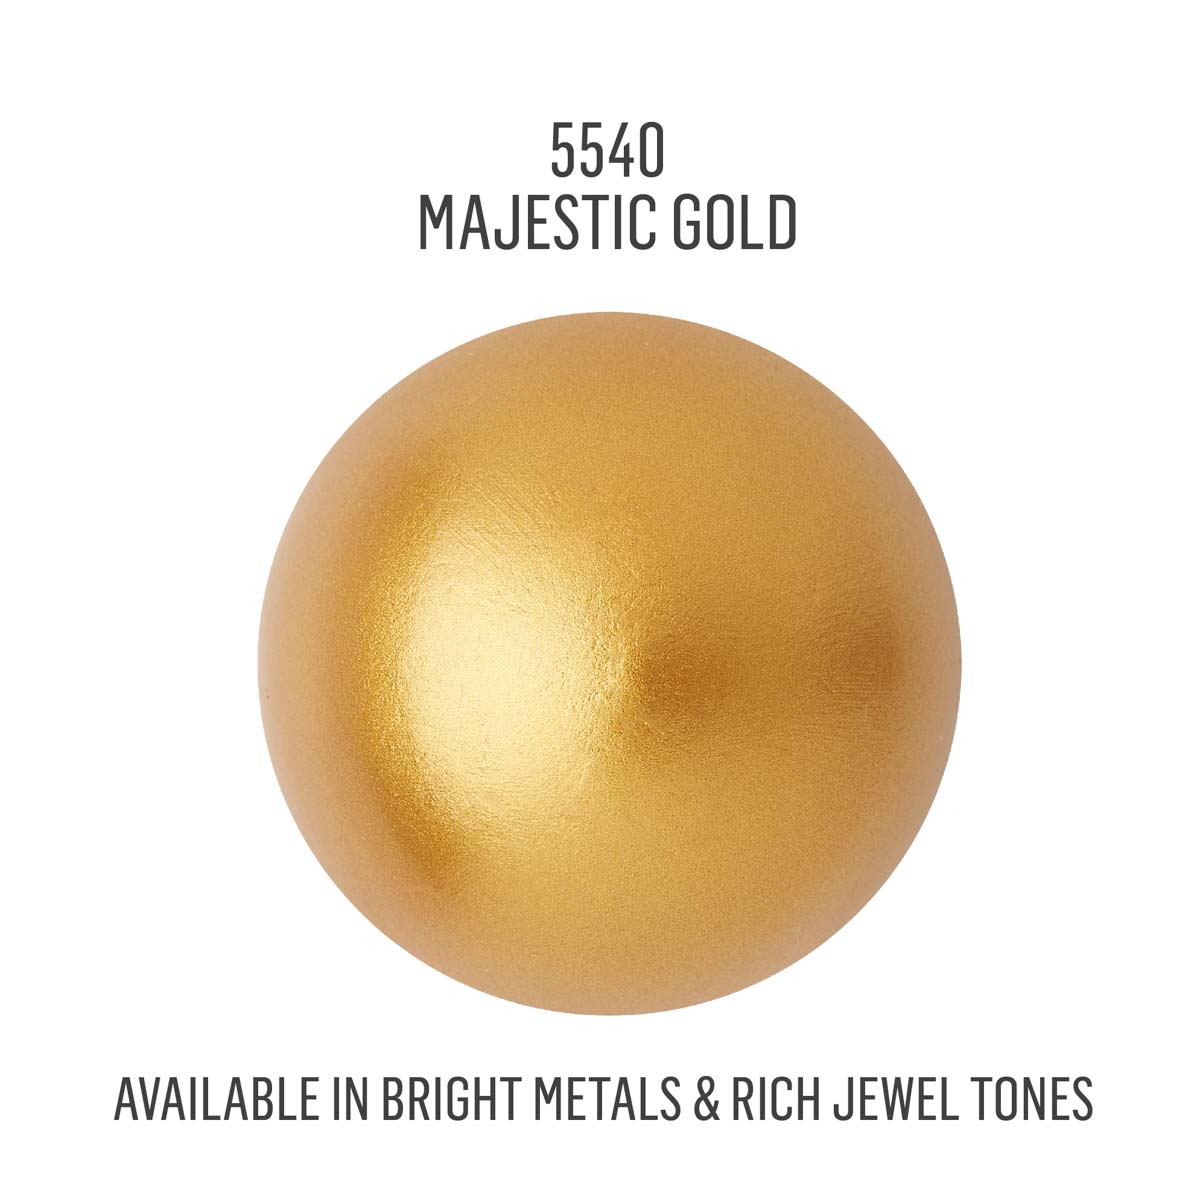 FolkArt ® Treasure Gold™ - Majestic Gold, 4 oz. - 5540